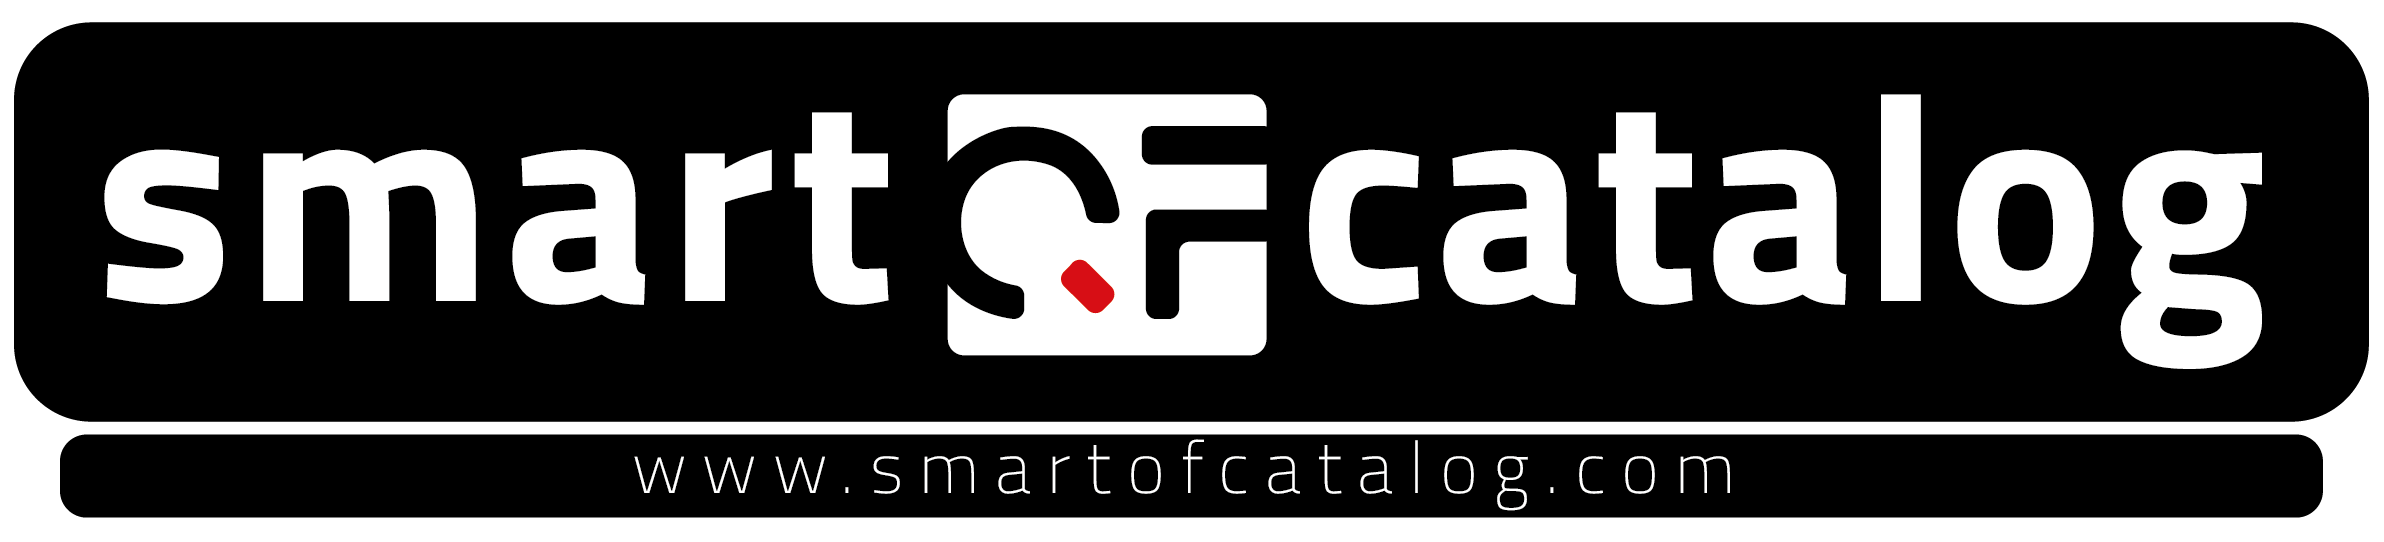 Smart Of Catalog_logo